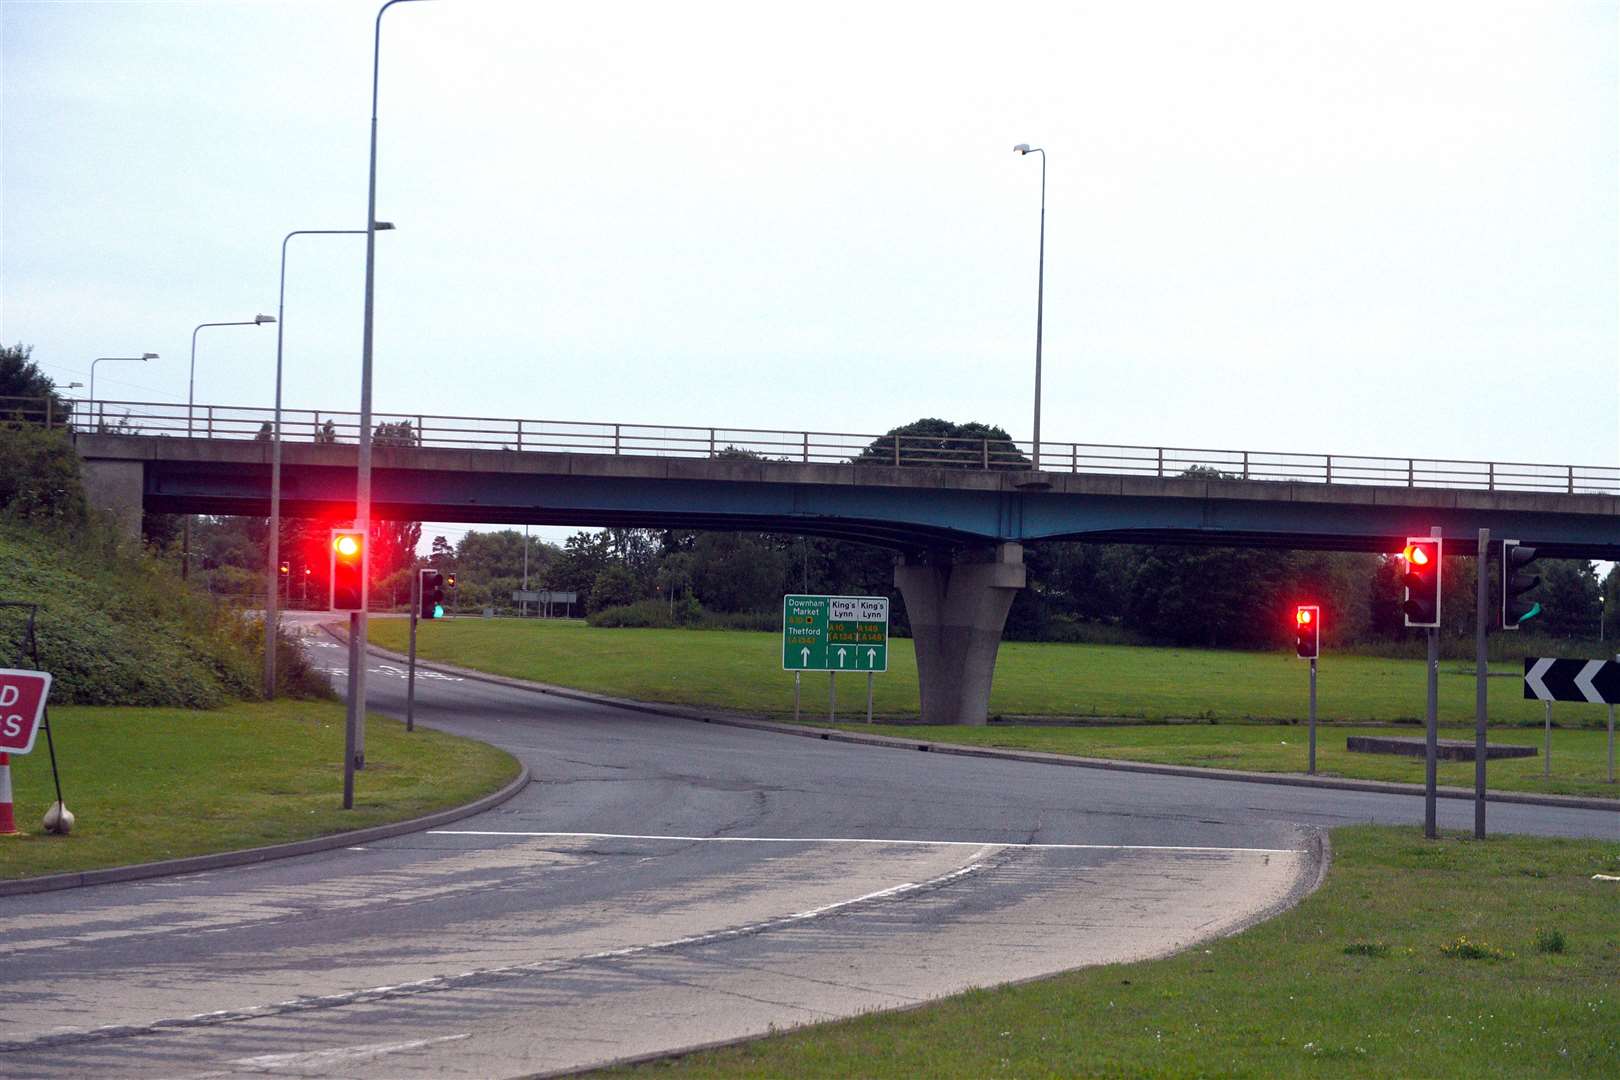 A stock image of Lynn’s Hardwick Roundabout